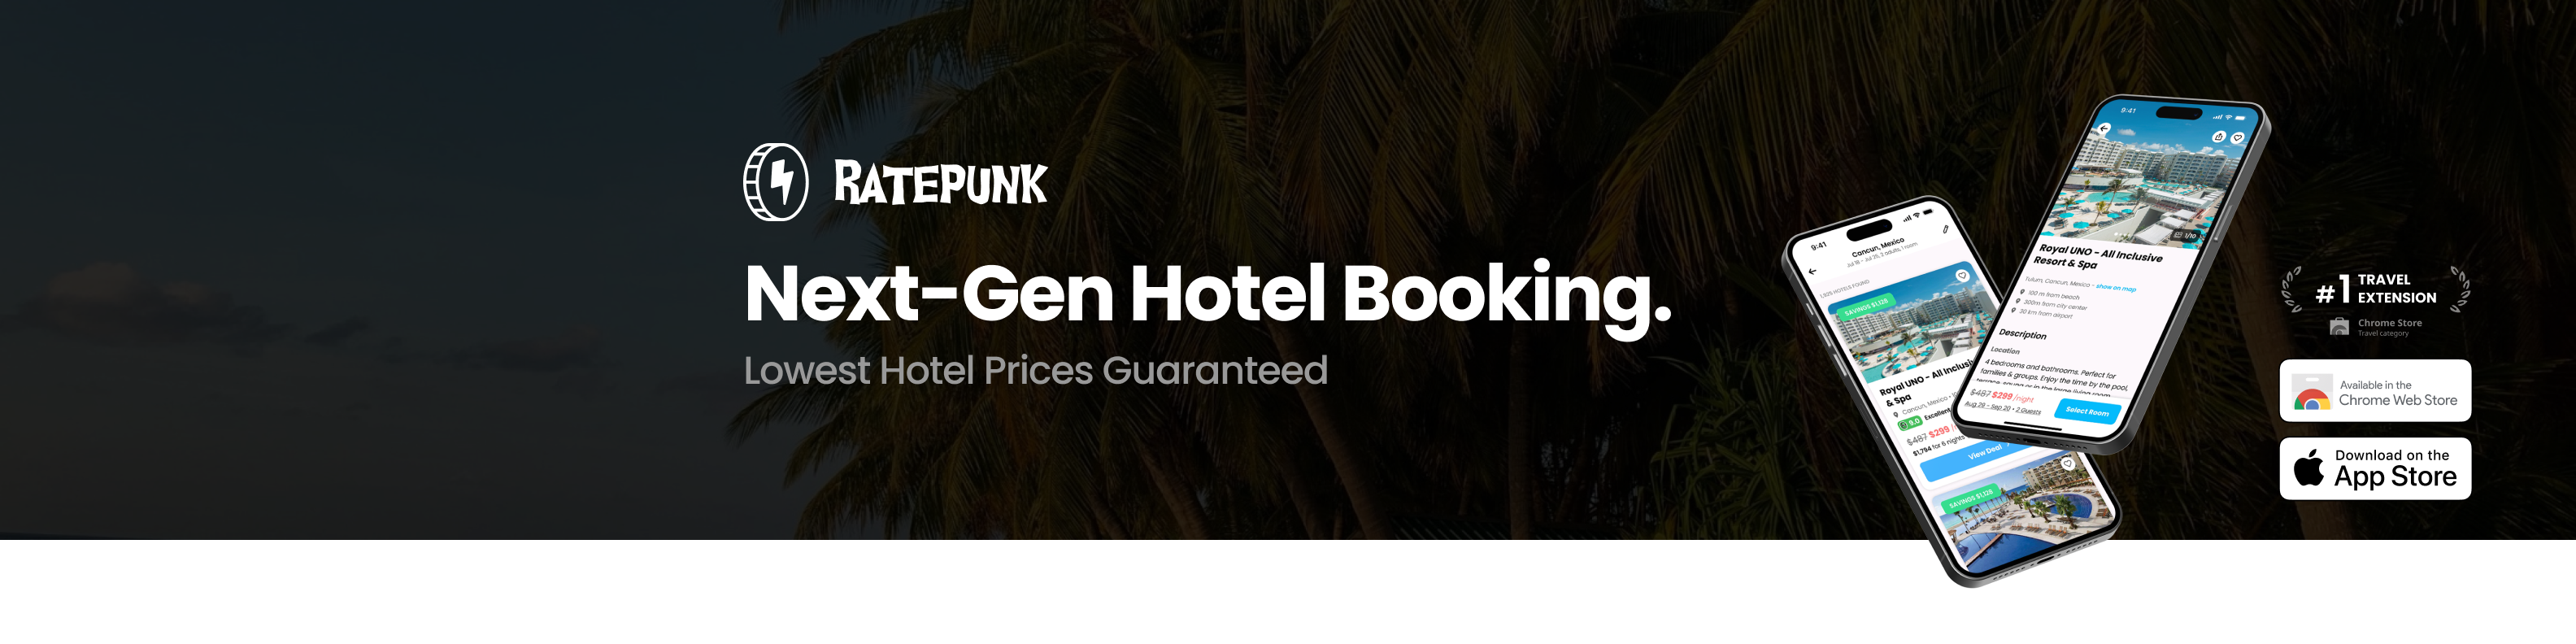 ratepunk next gen hotel booking